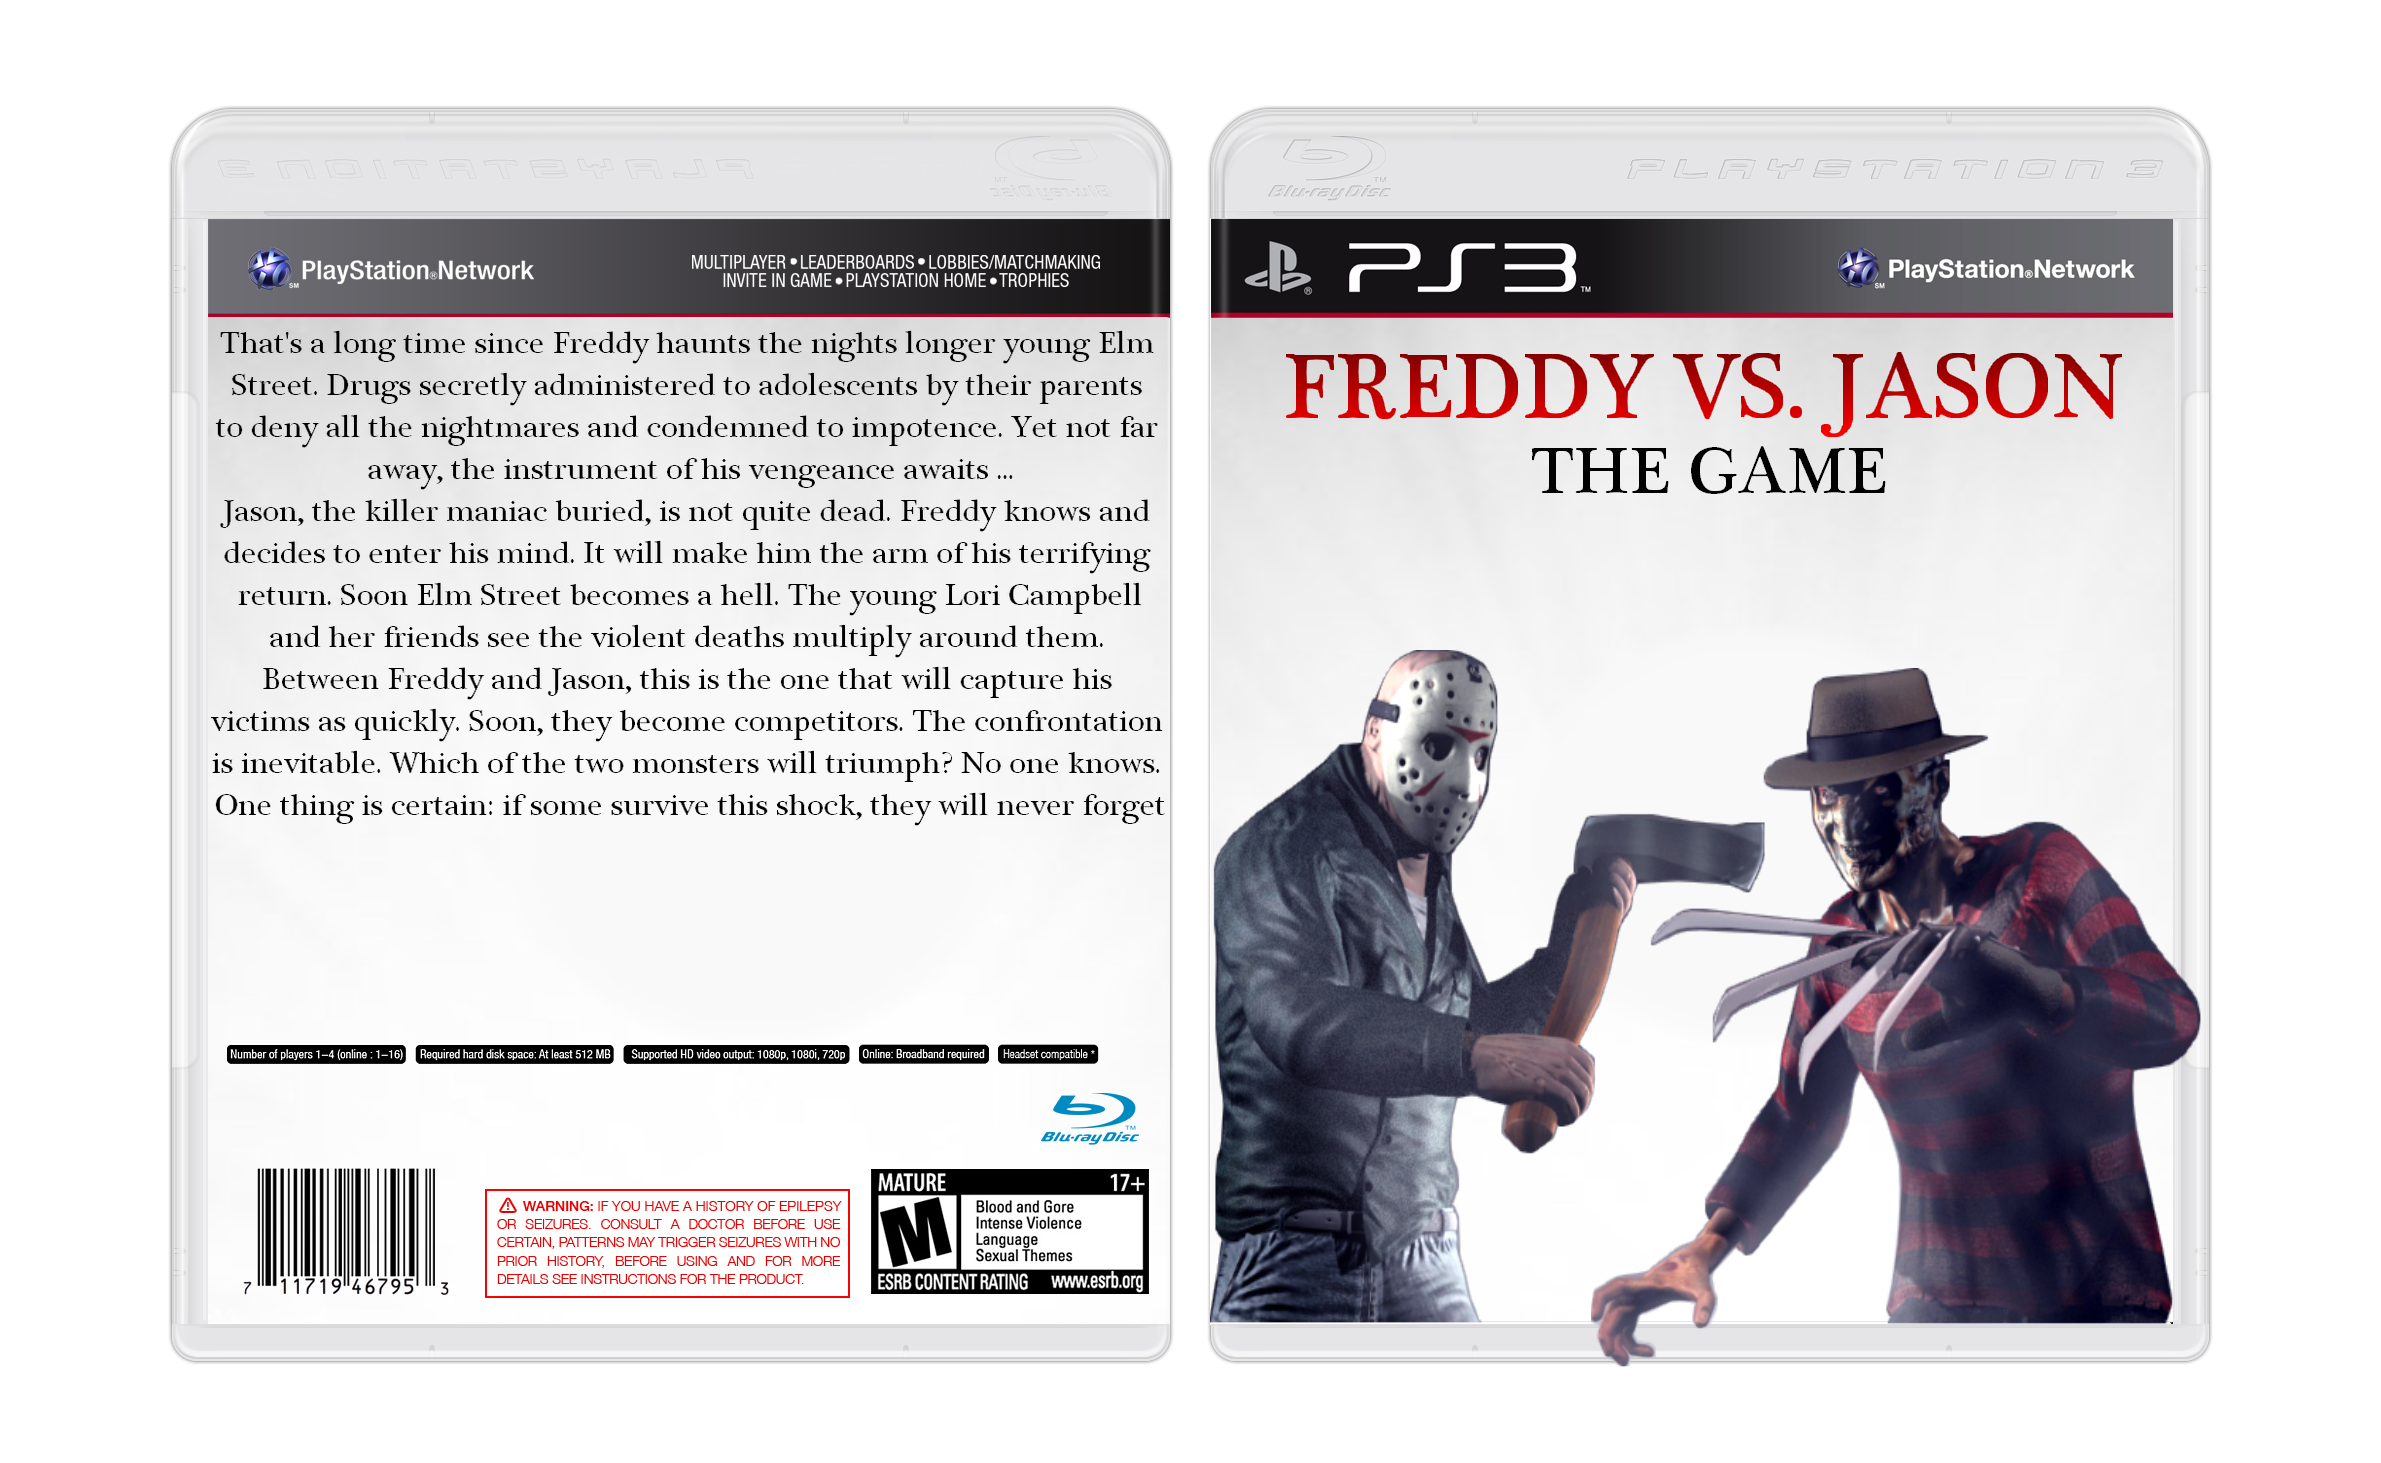 Freddy Vs. Jason box cover